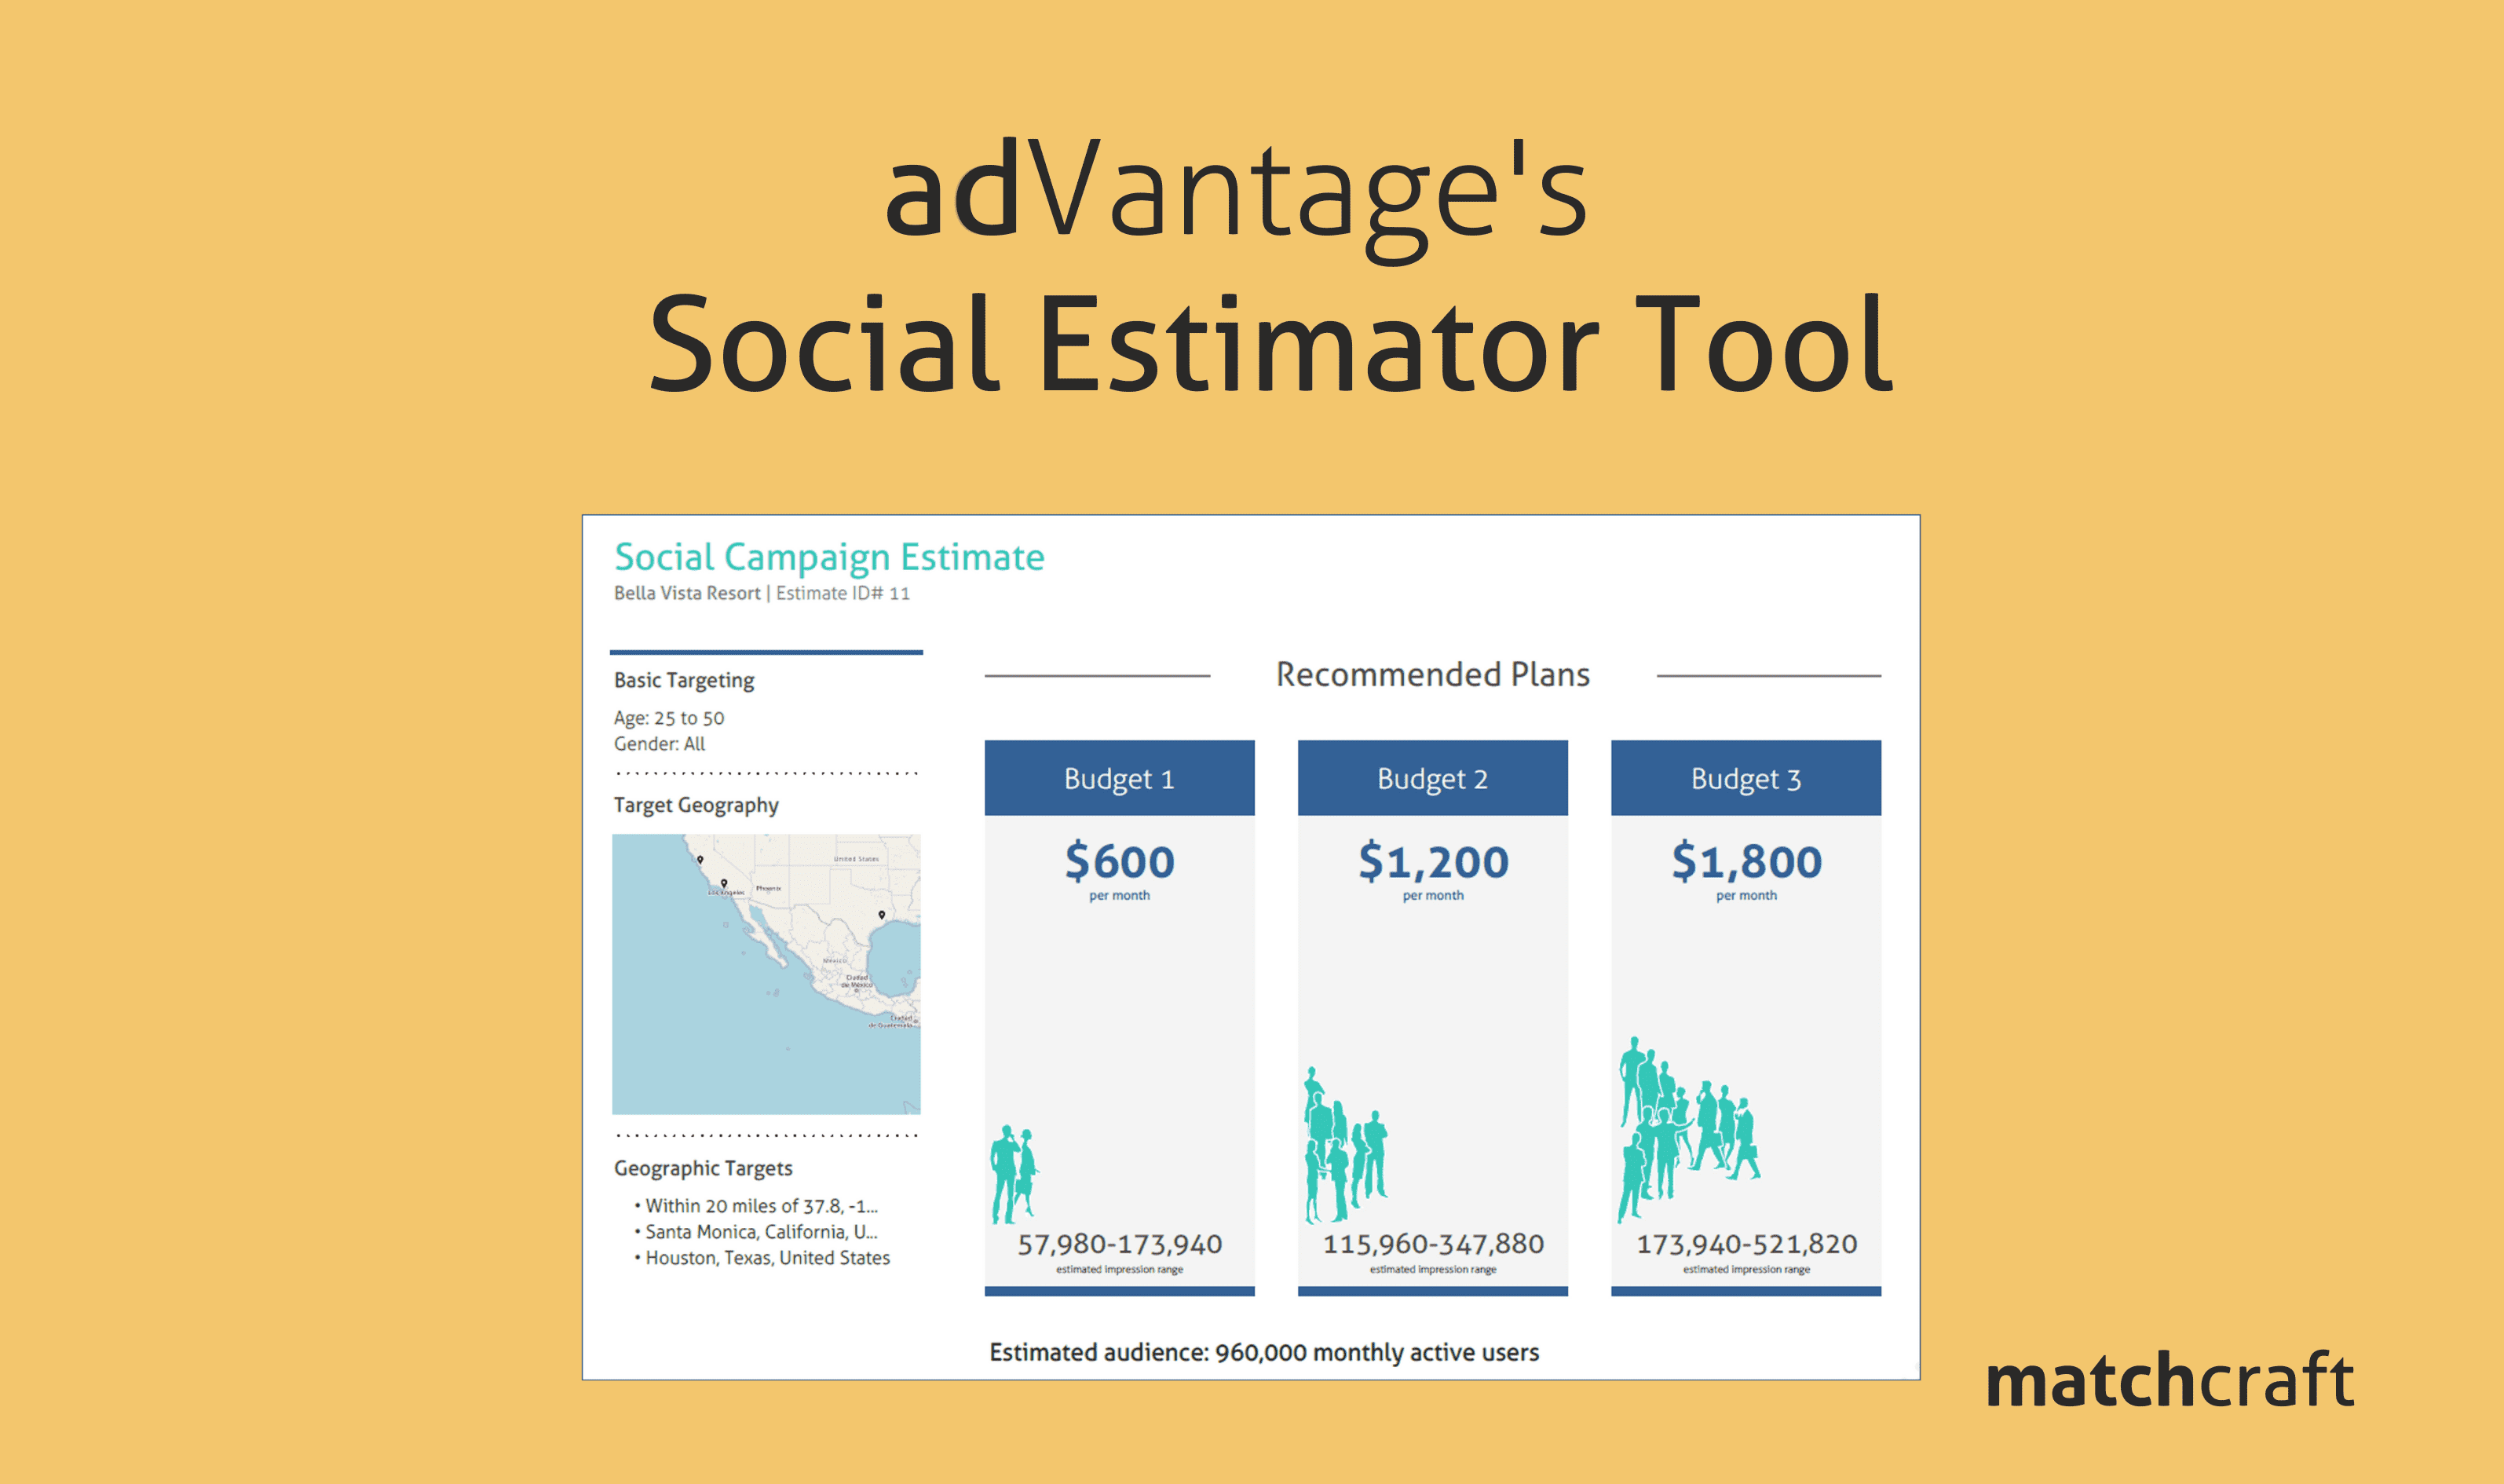 adVantage’s Social Estimator Tool